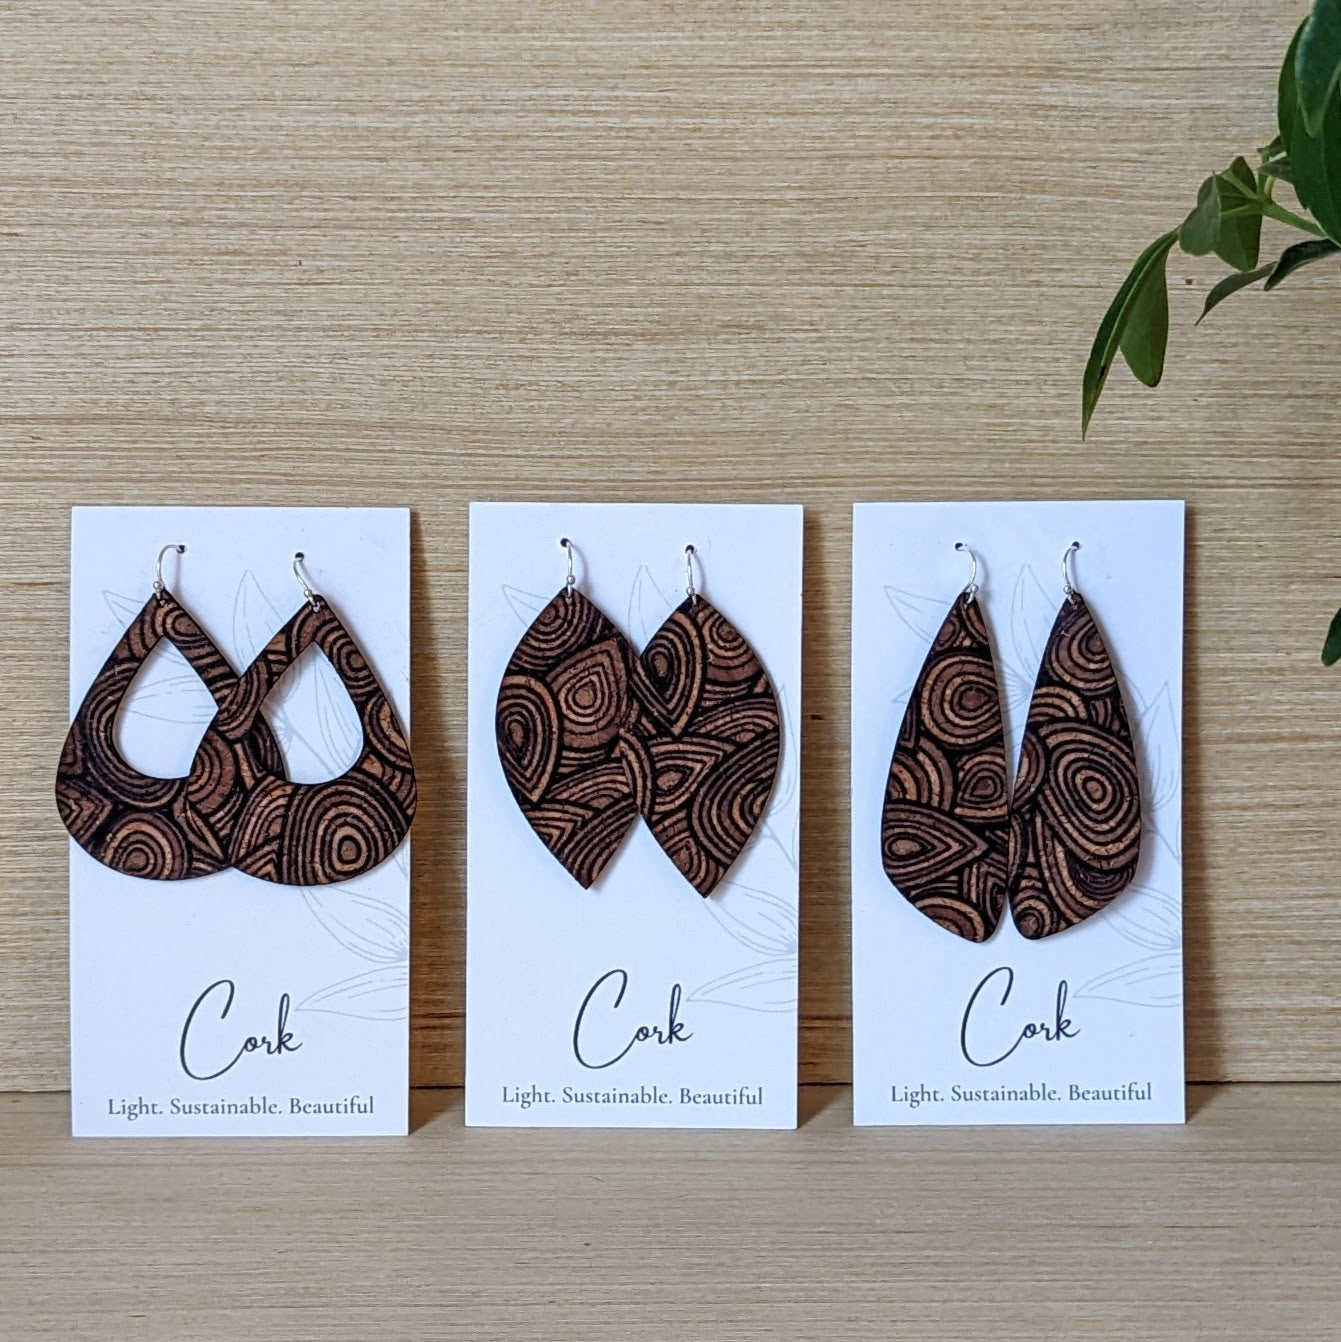 Natural with Wood Grain Cork Earrings - Leaf